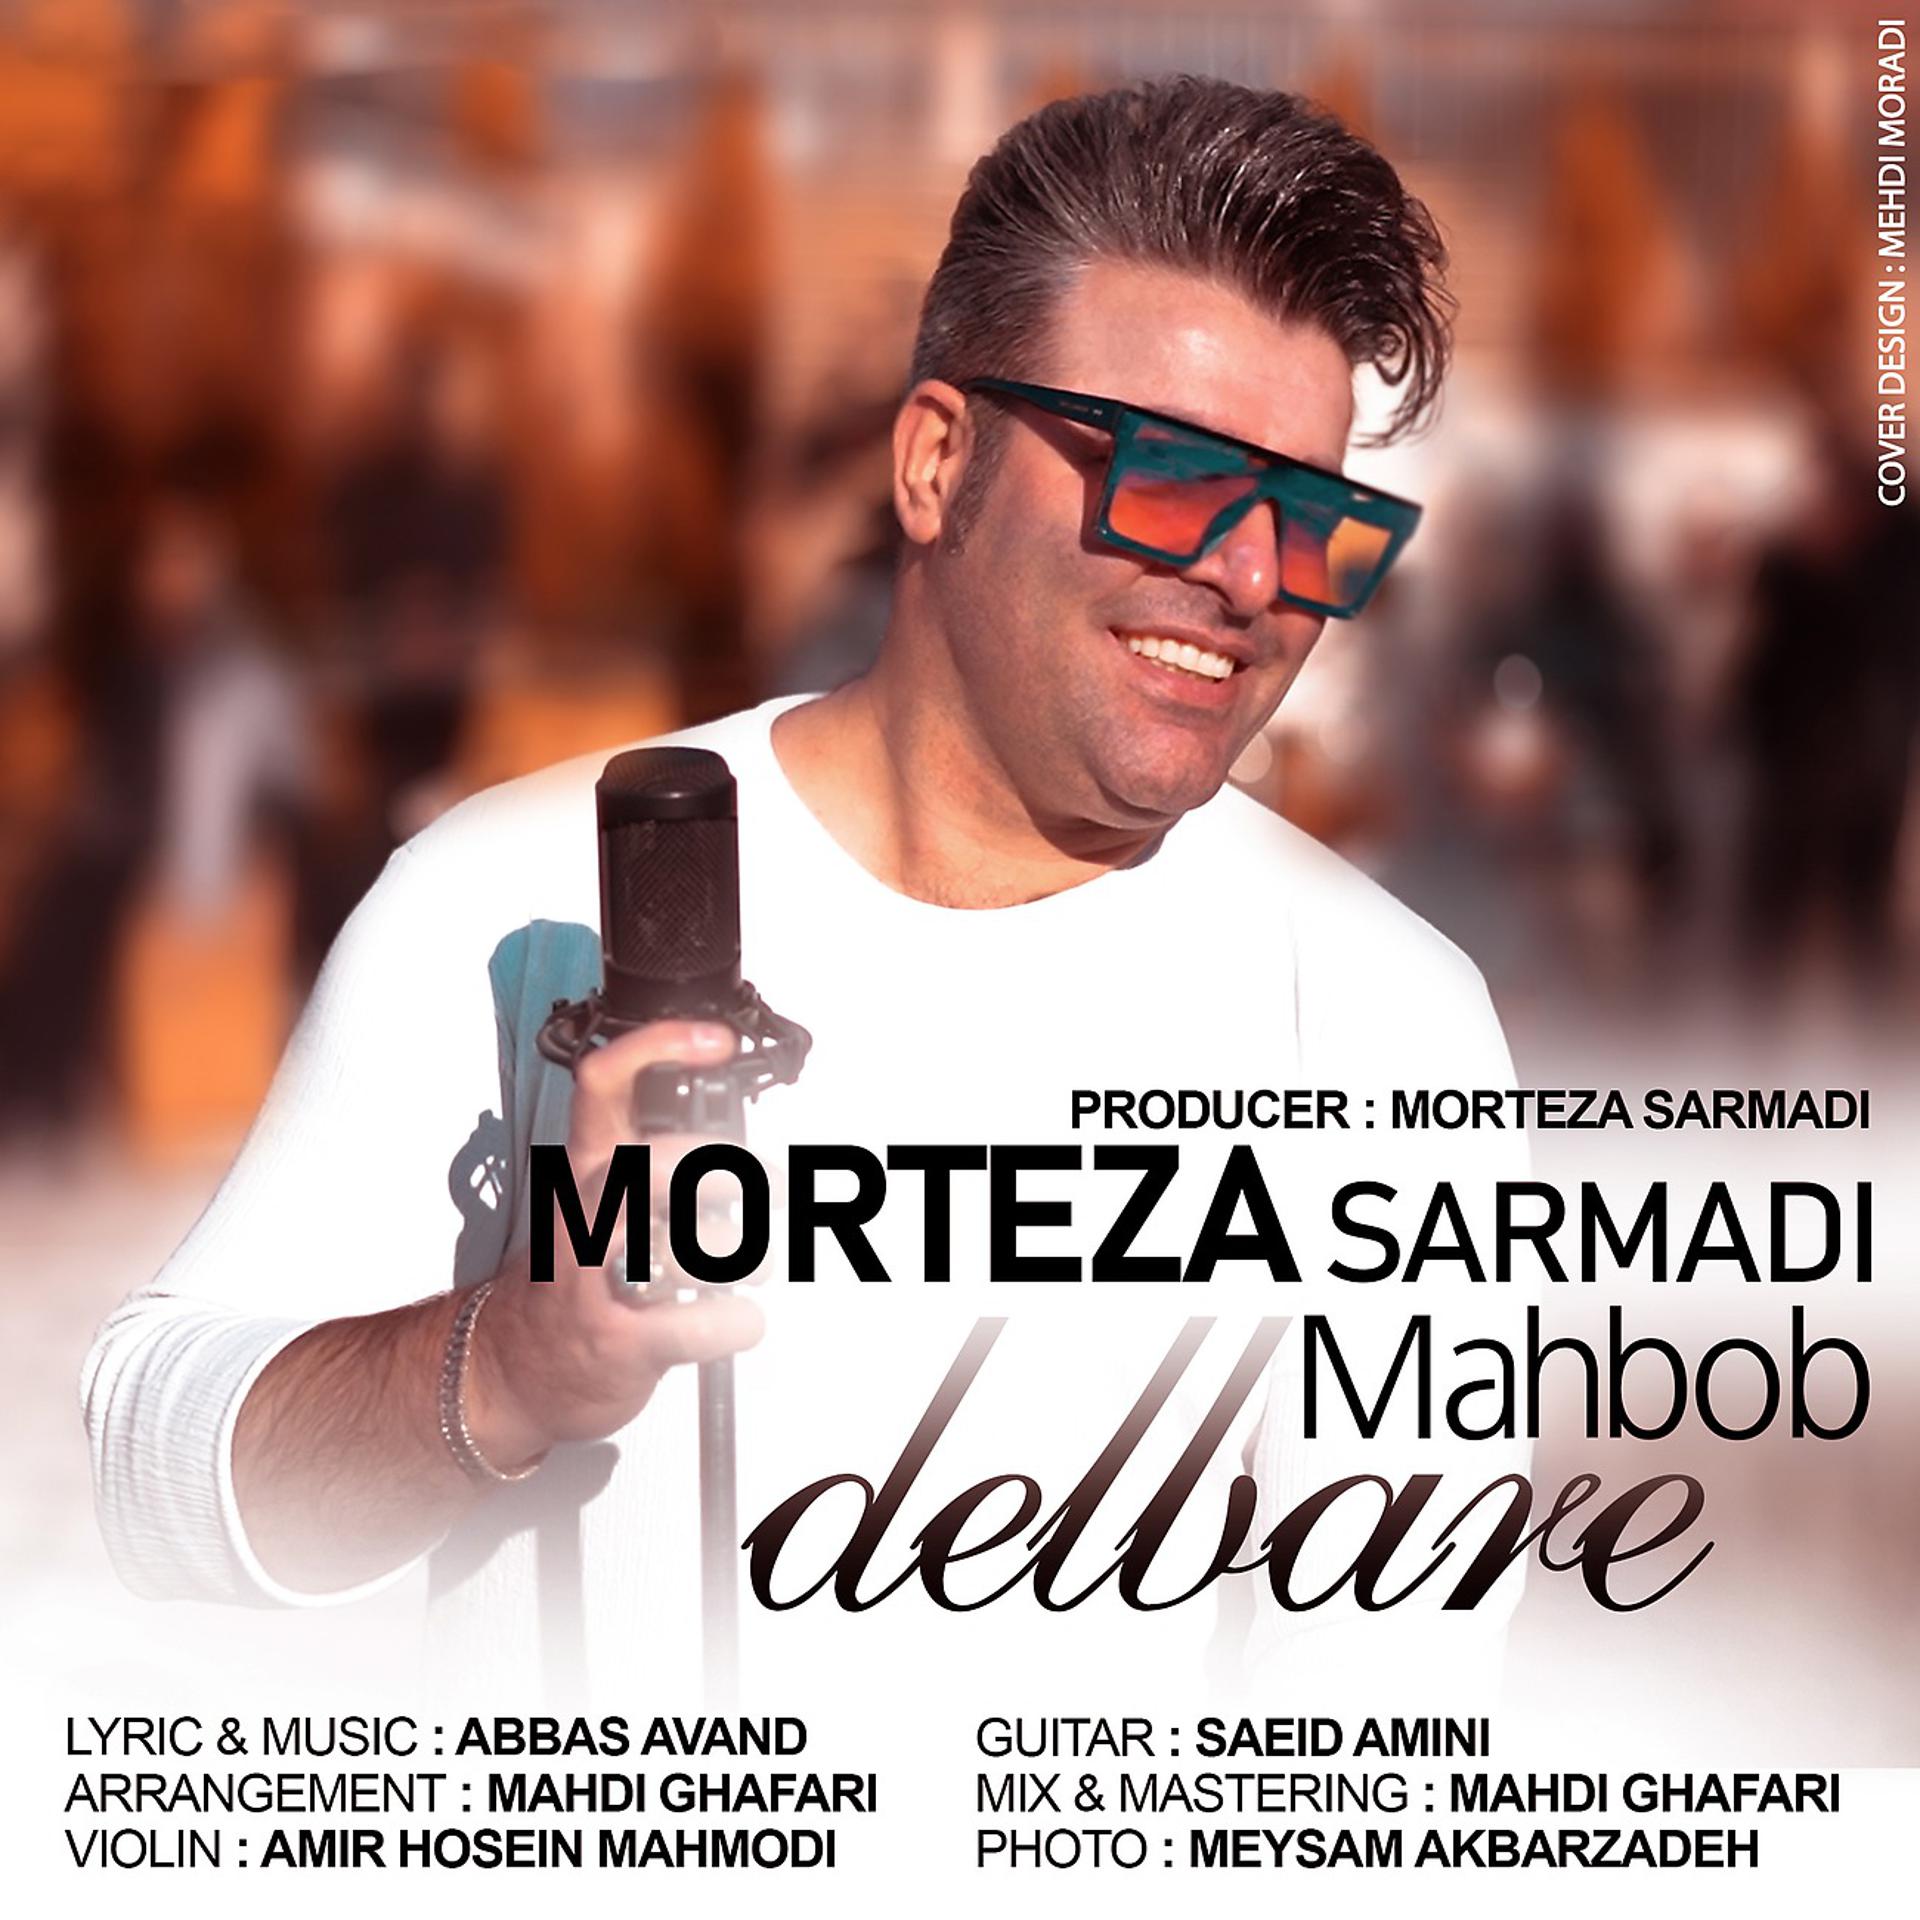 Постер к треку Morteza Sarmadi - Delbare Mahboob